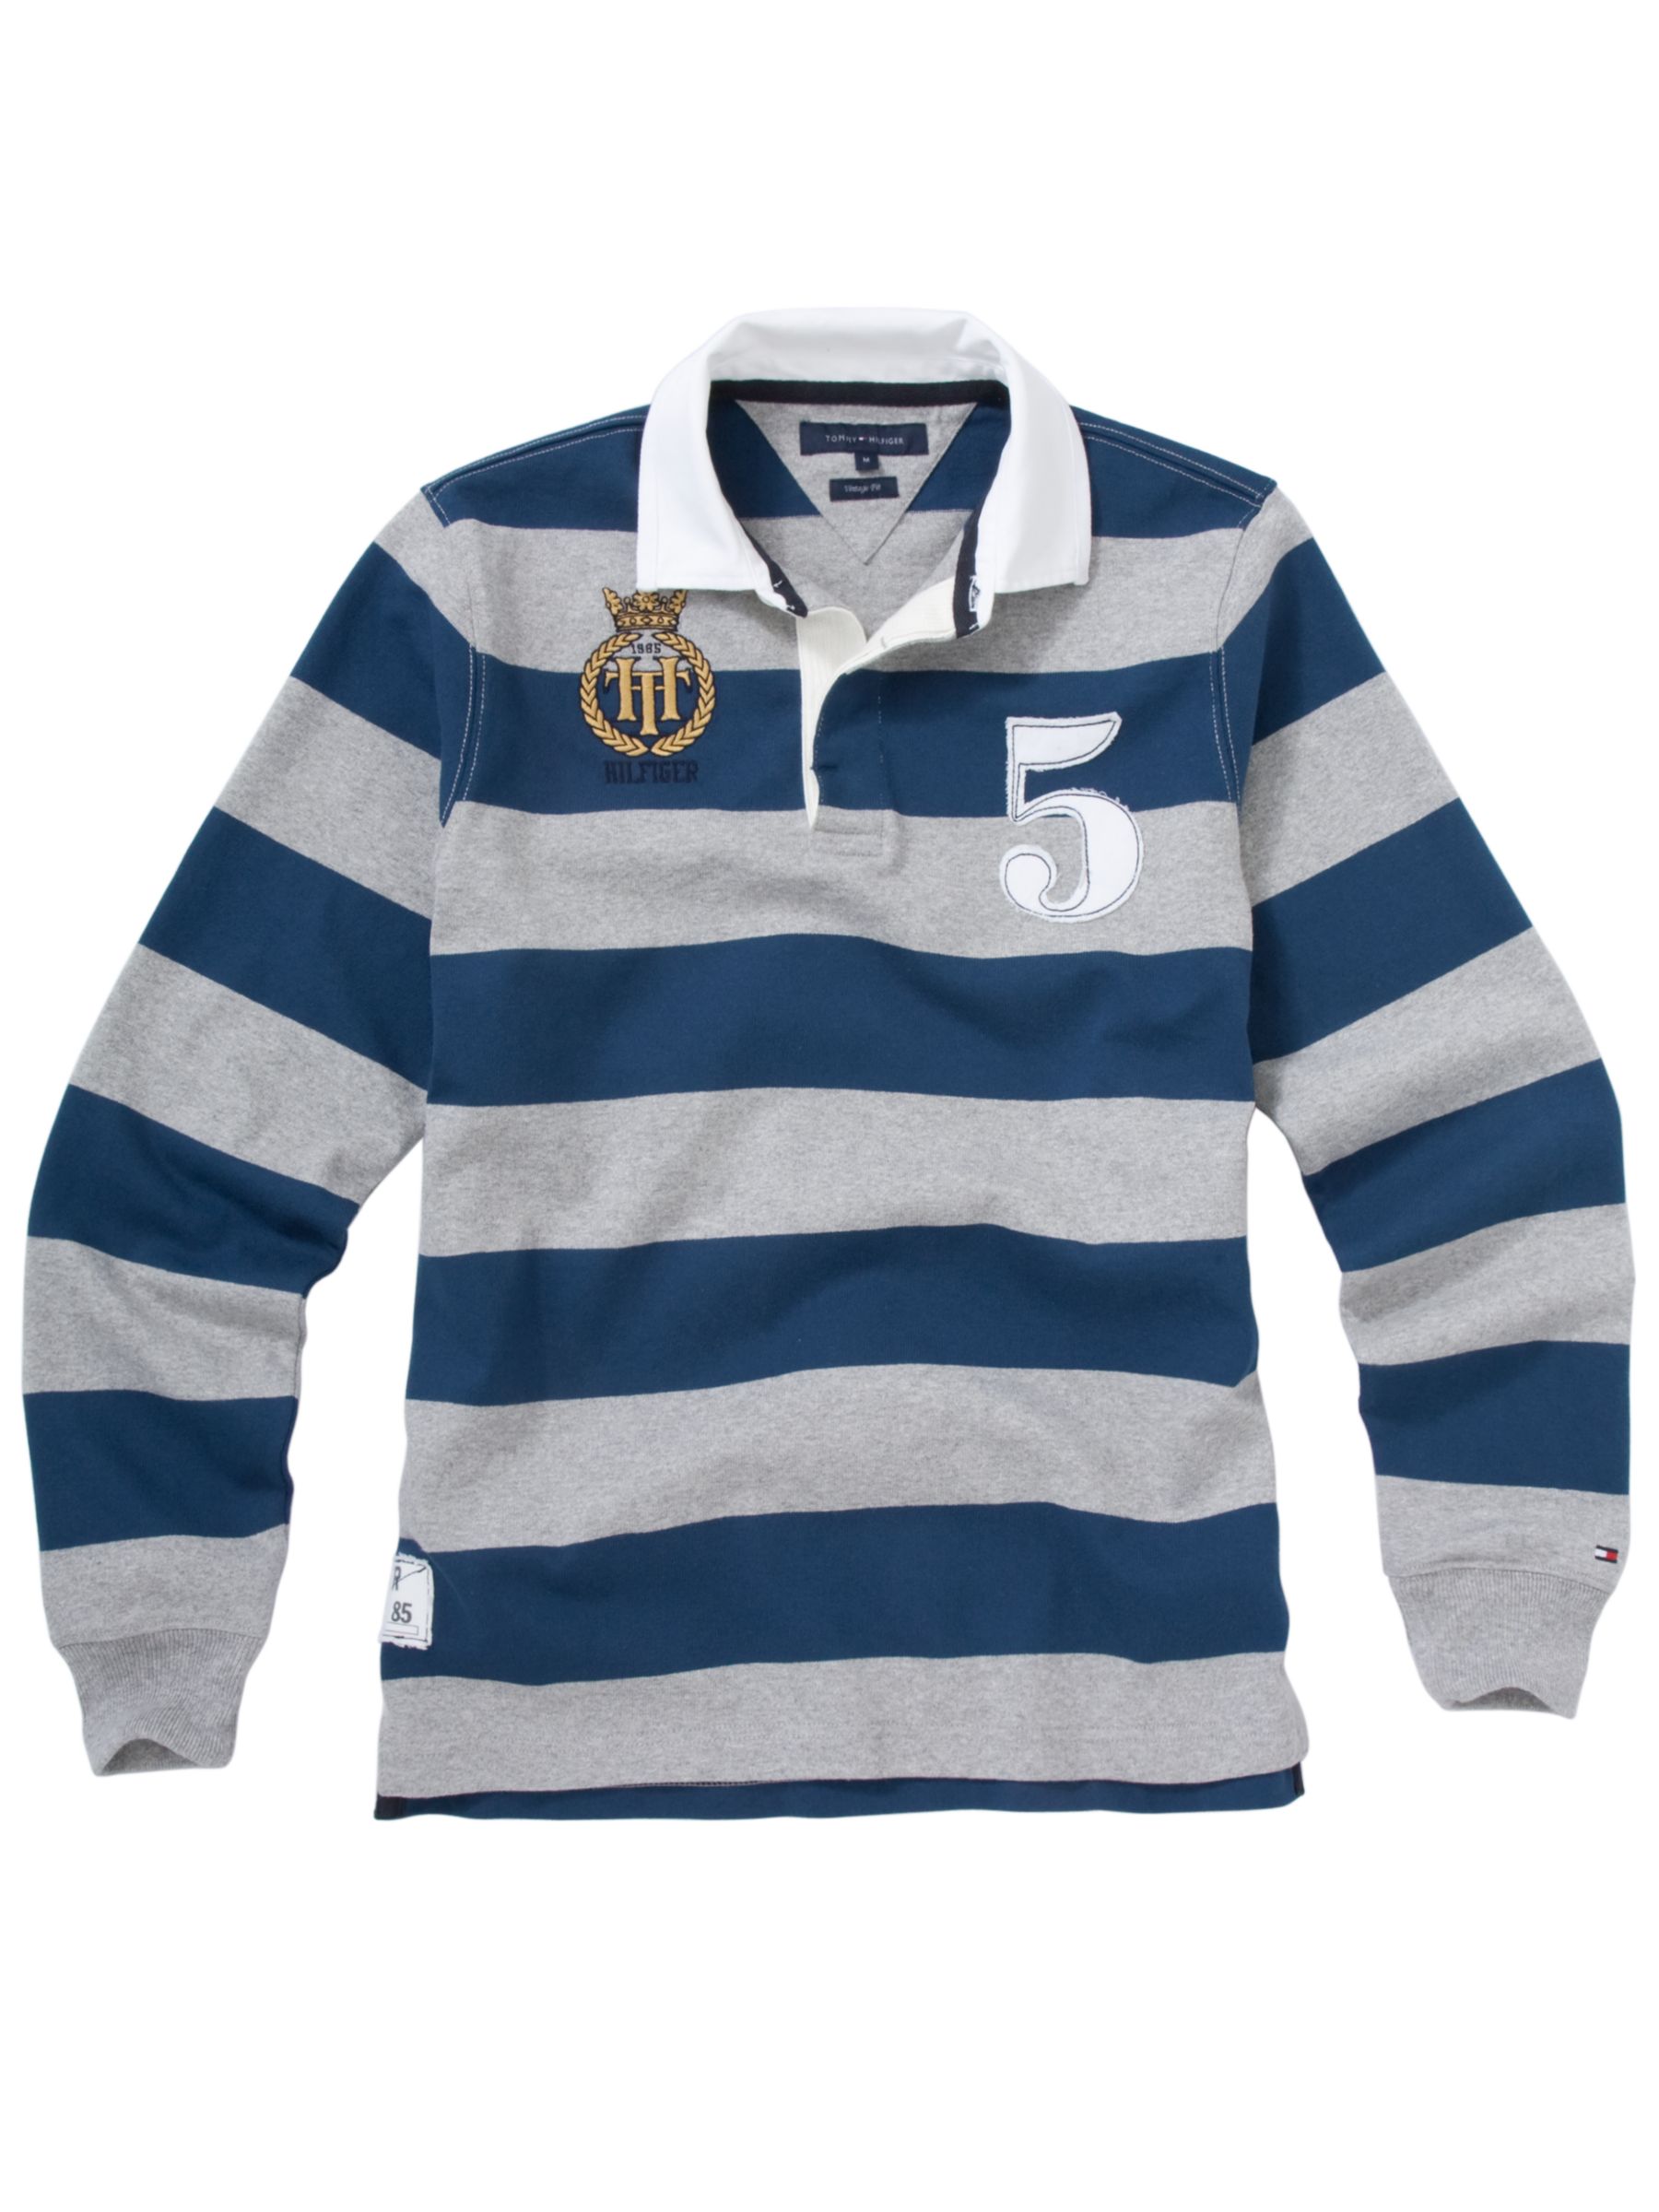 Tommy Hilfiger Stripe Rugby Shirt, Blue